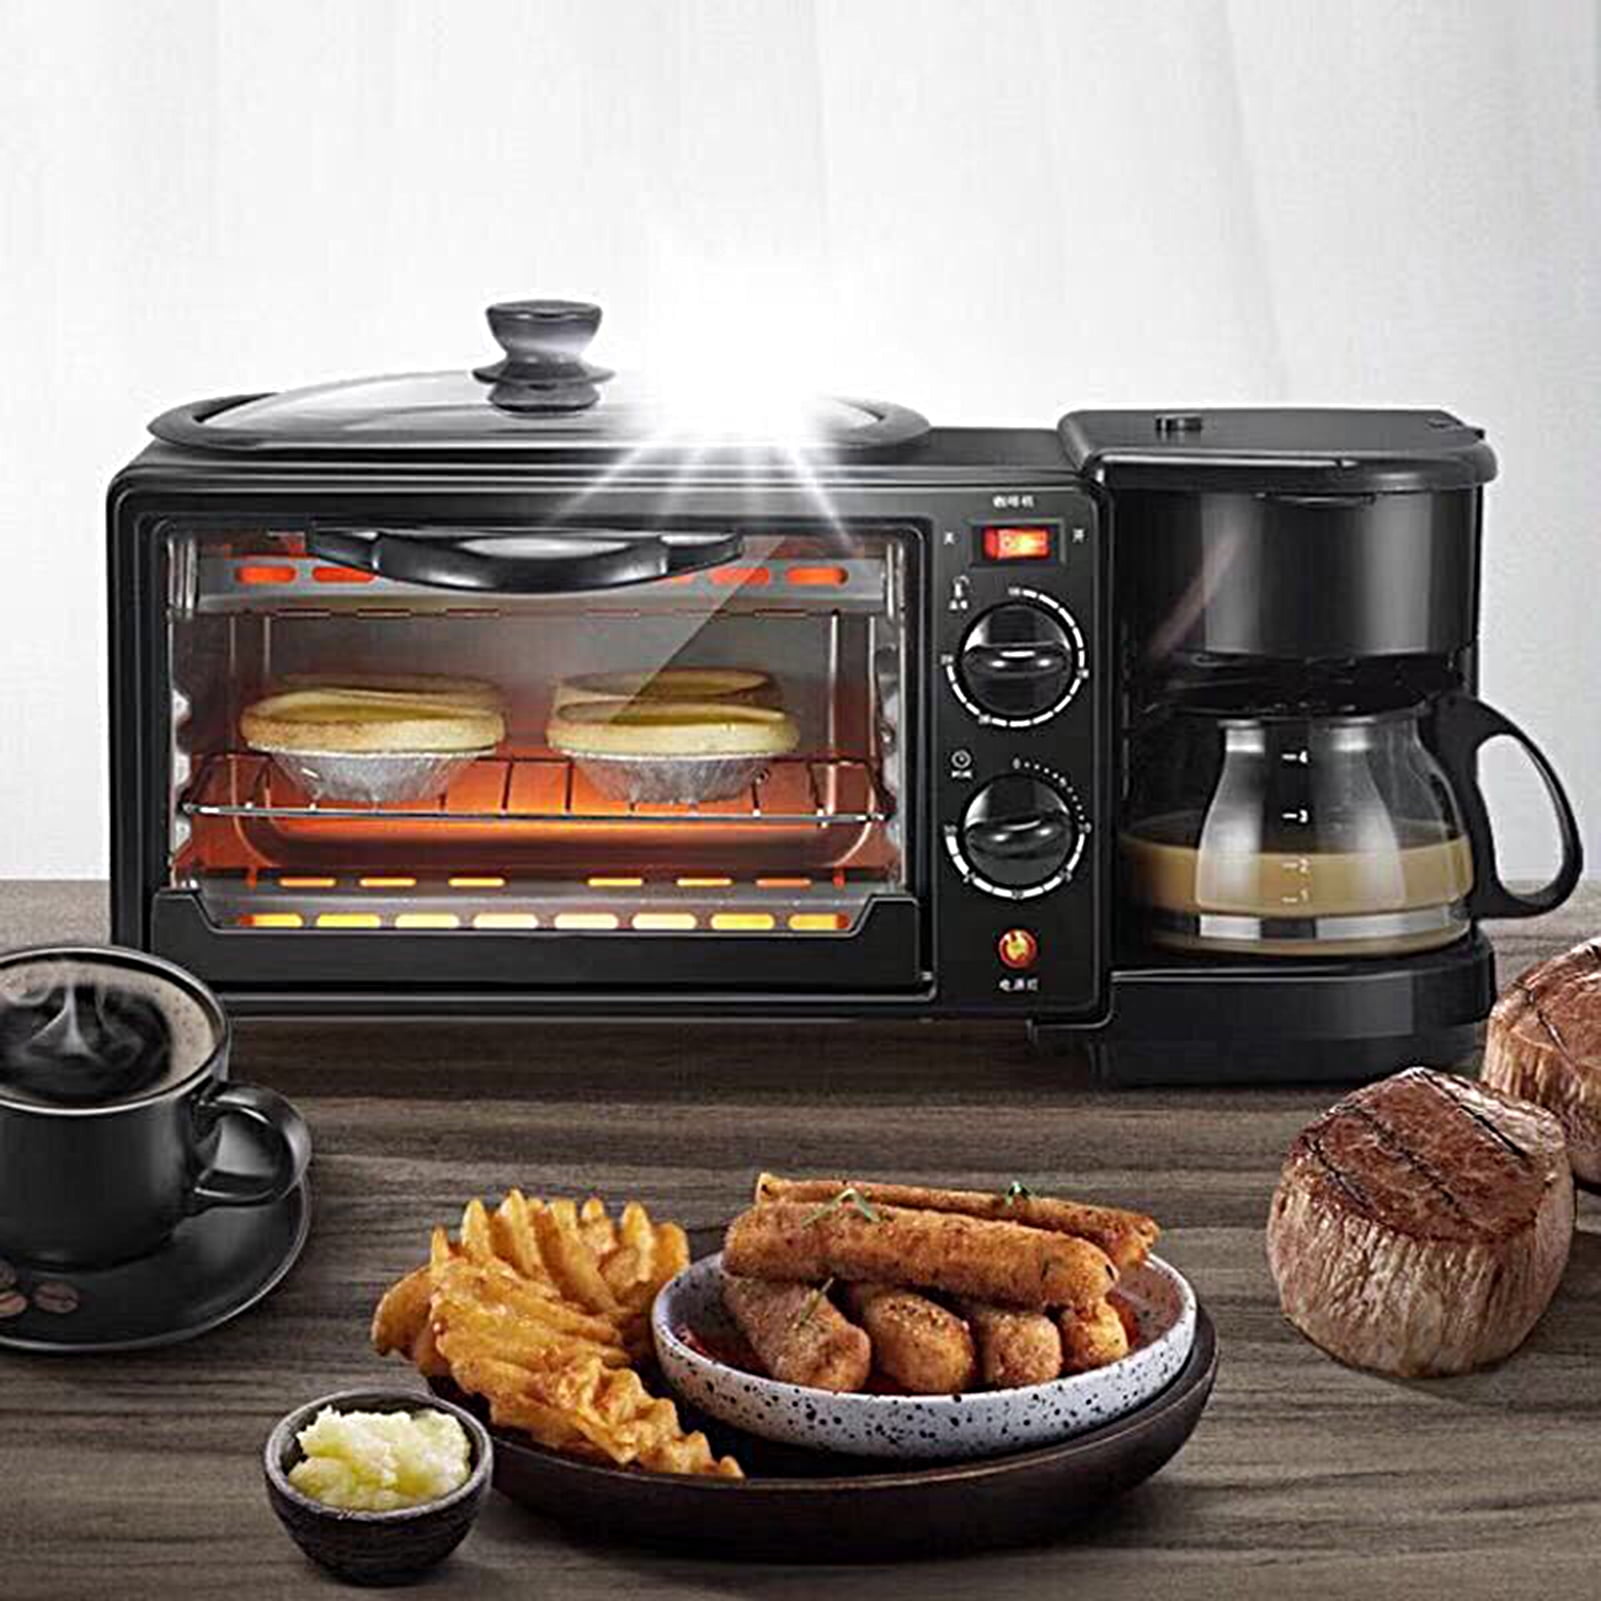 Breakfast Machine Bread Toaster EU Plug 220-240V Slim Body Design 2 Slice  Bread Toaster For Office Home Kitchen Supplies And Bread